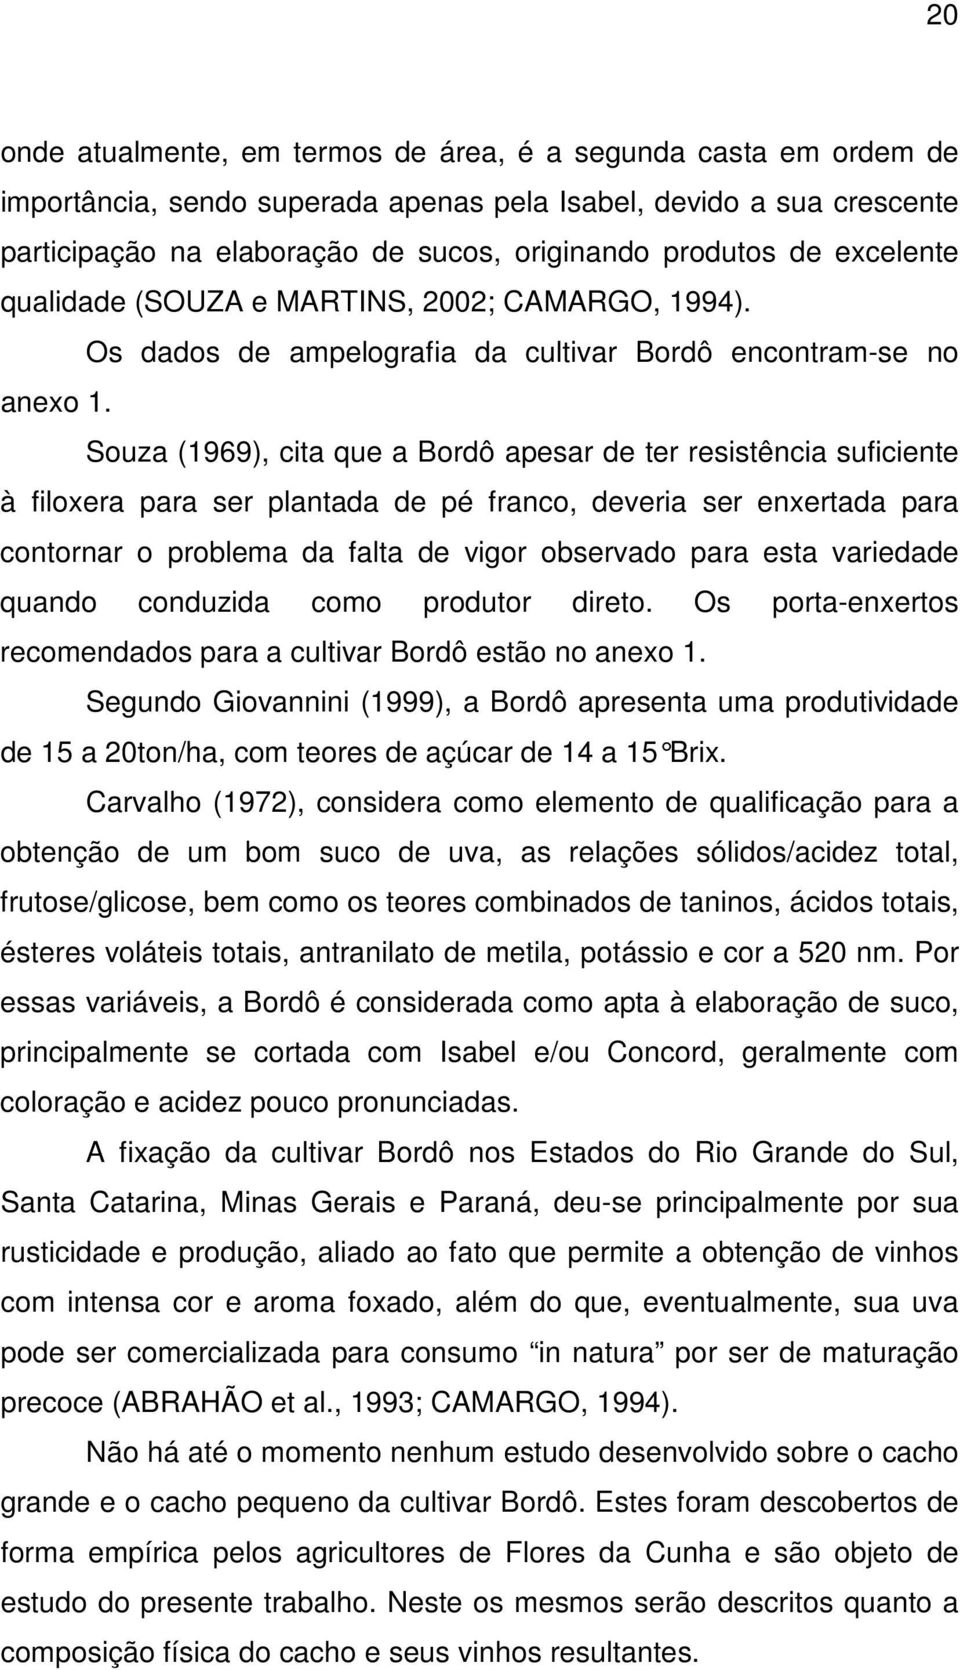 Souza (1969), cita que a Bordô apesar de ter resistência suficiente à filoxera para ser plantada de pé franco, deveria ser enxertada para contornar o problema da falta de vigor observado para esta